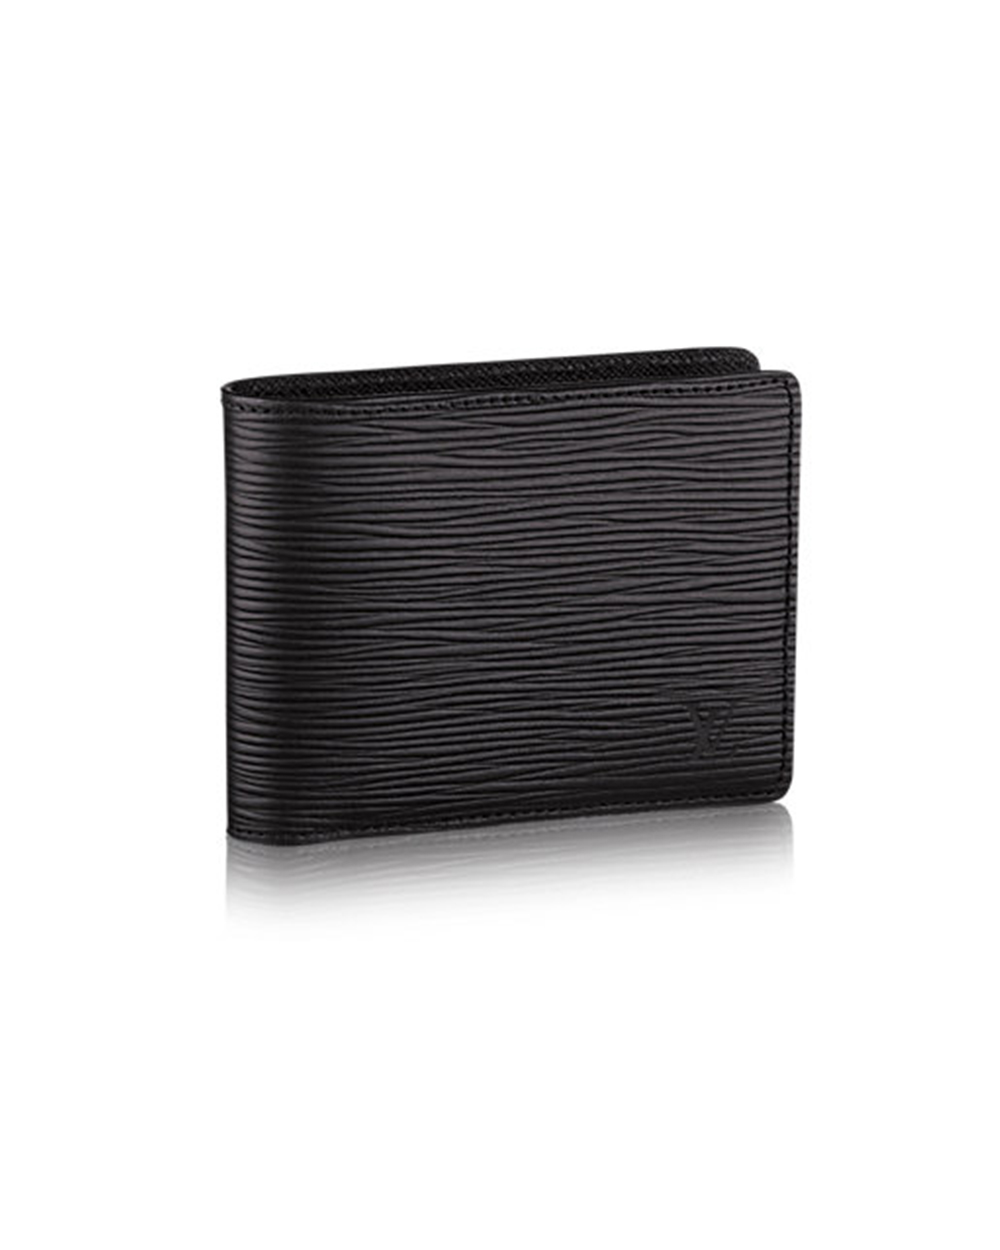 Louis Vuitton epi wallet, $POA.